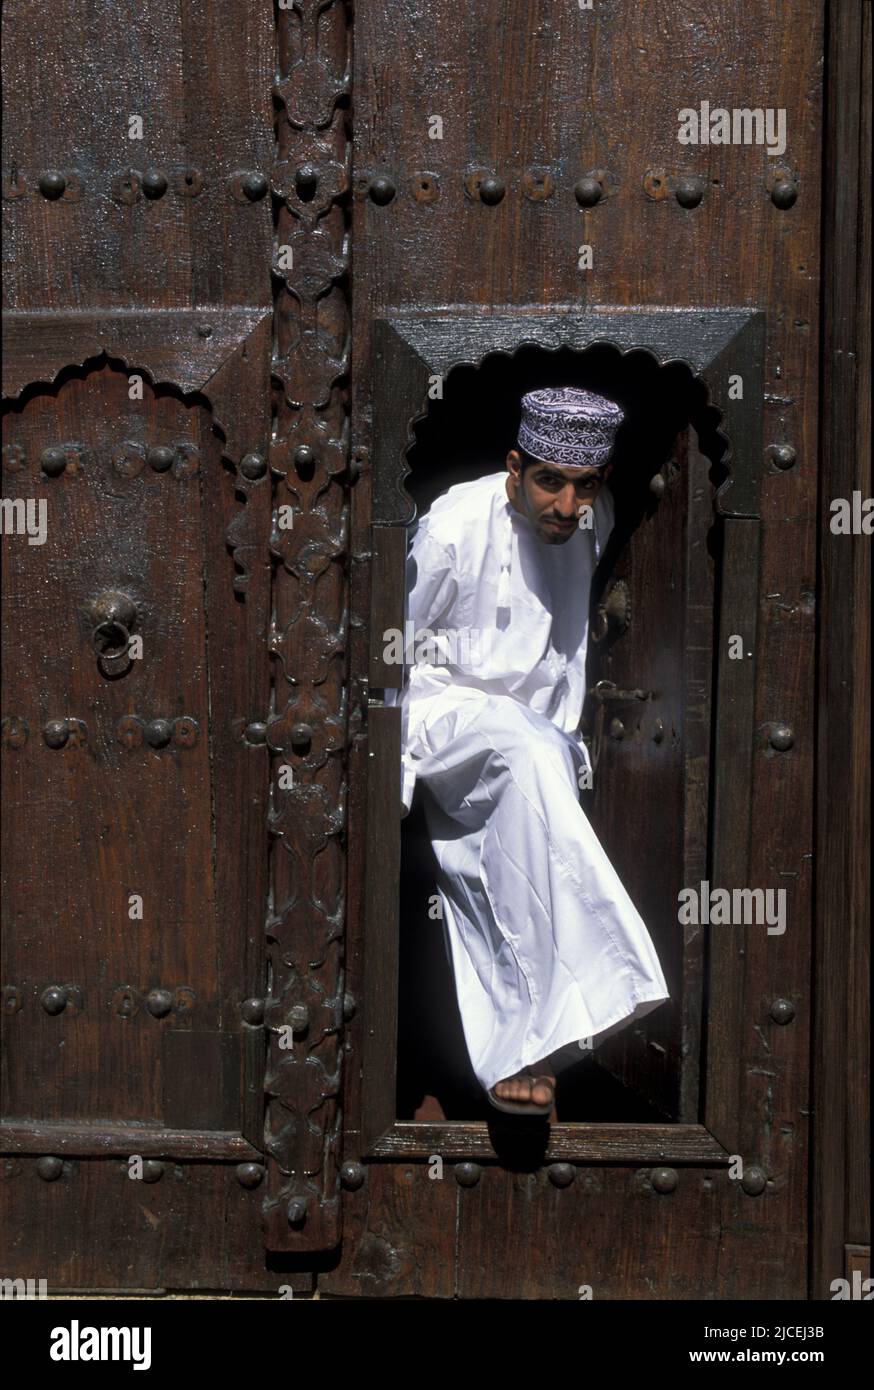 Traditional door within a large door, Muscat, Oman 1980s Stock Photo